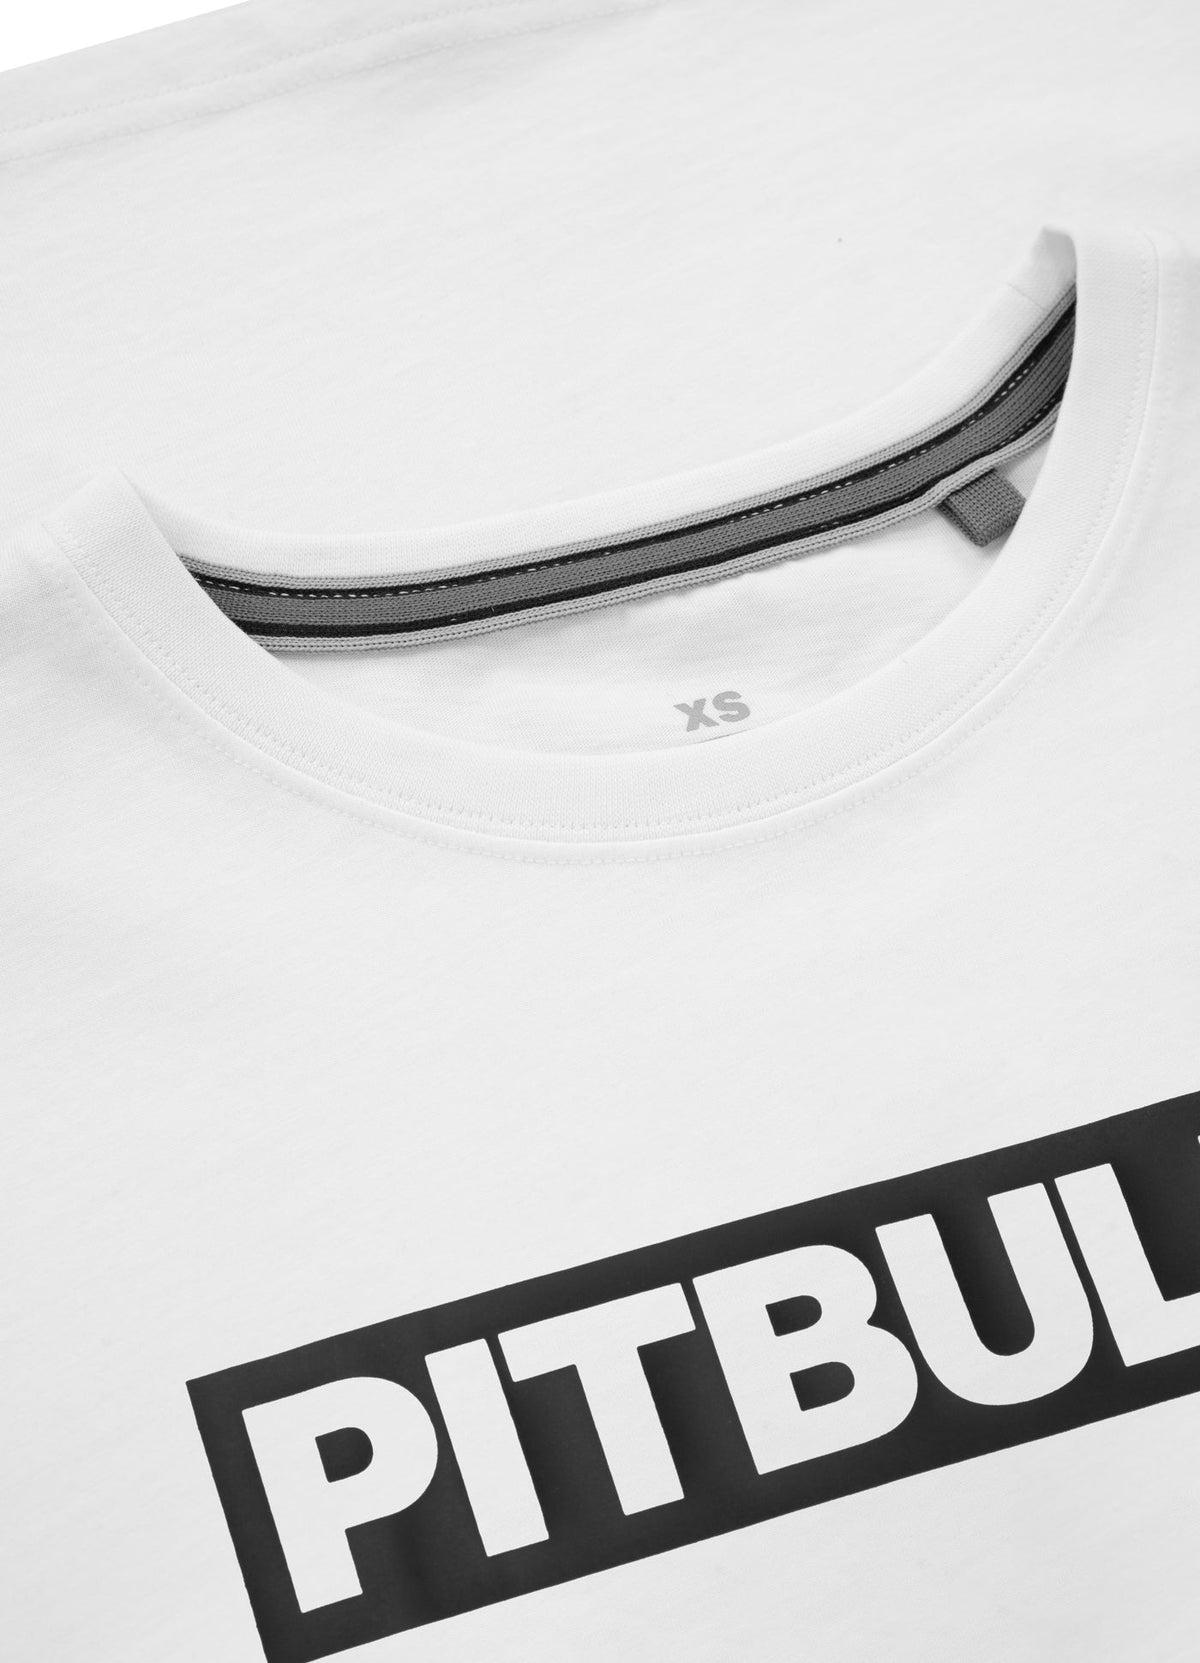 HILLTOP REGULAR White T-shirt